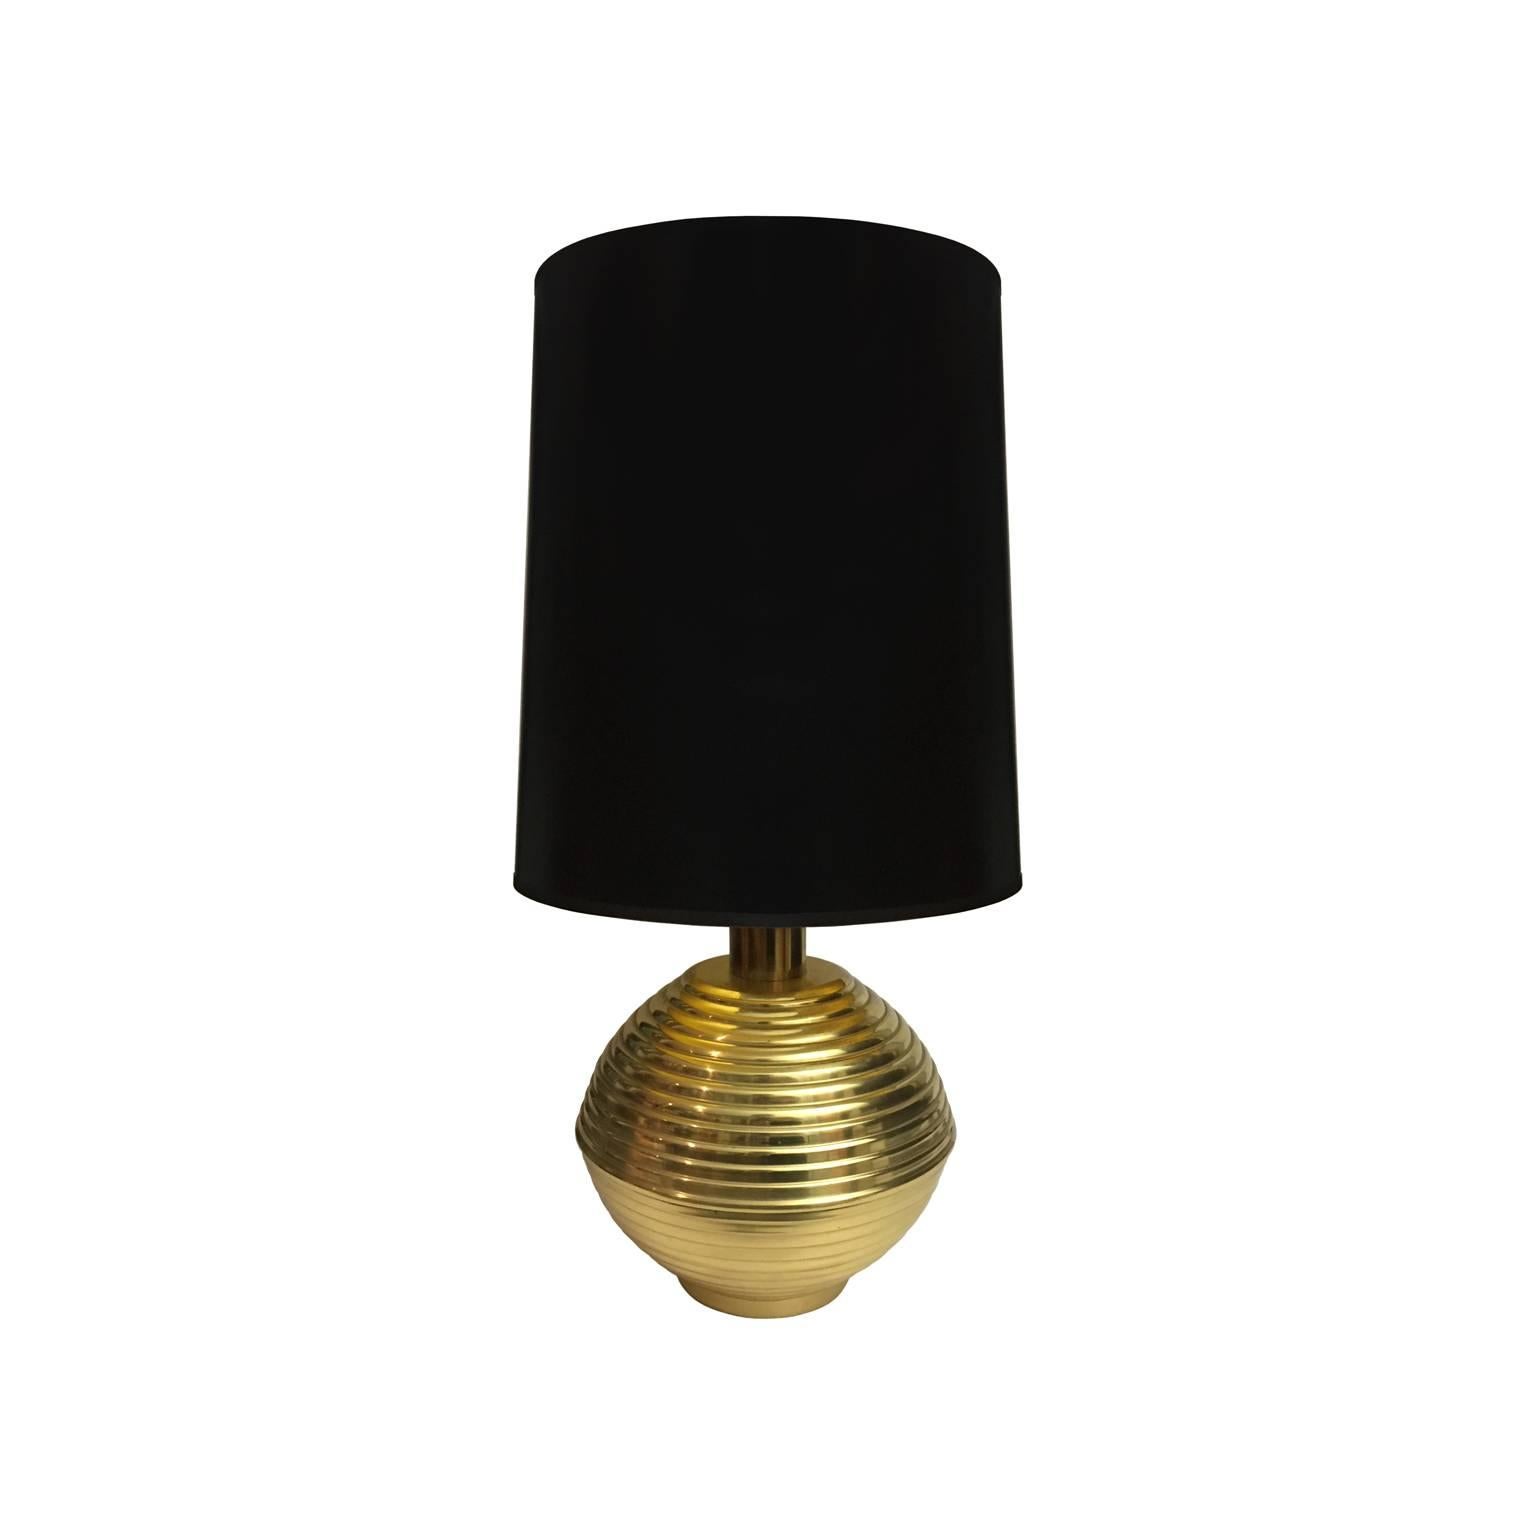 Italian Ribbed Brass Globe Table Lamp with Black Shade